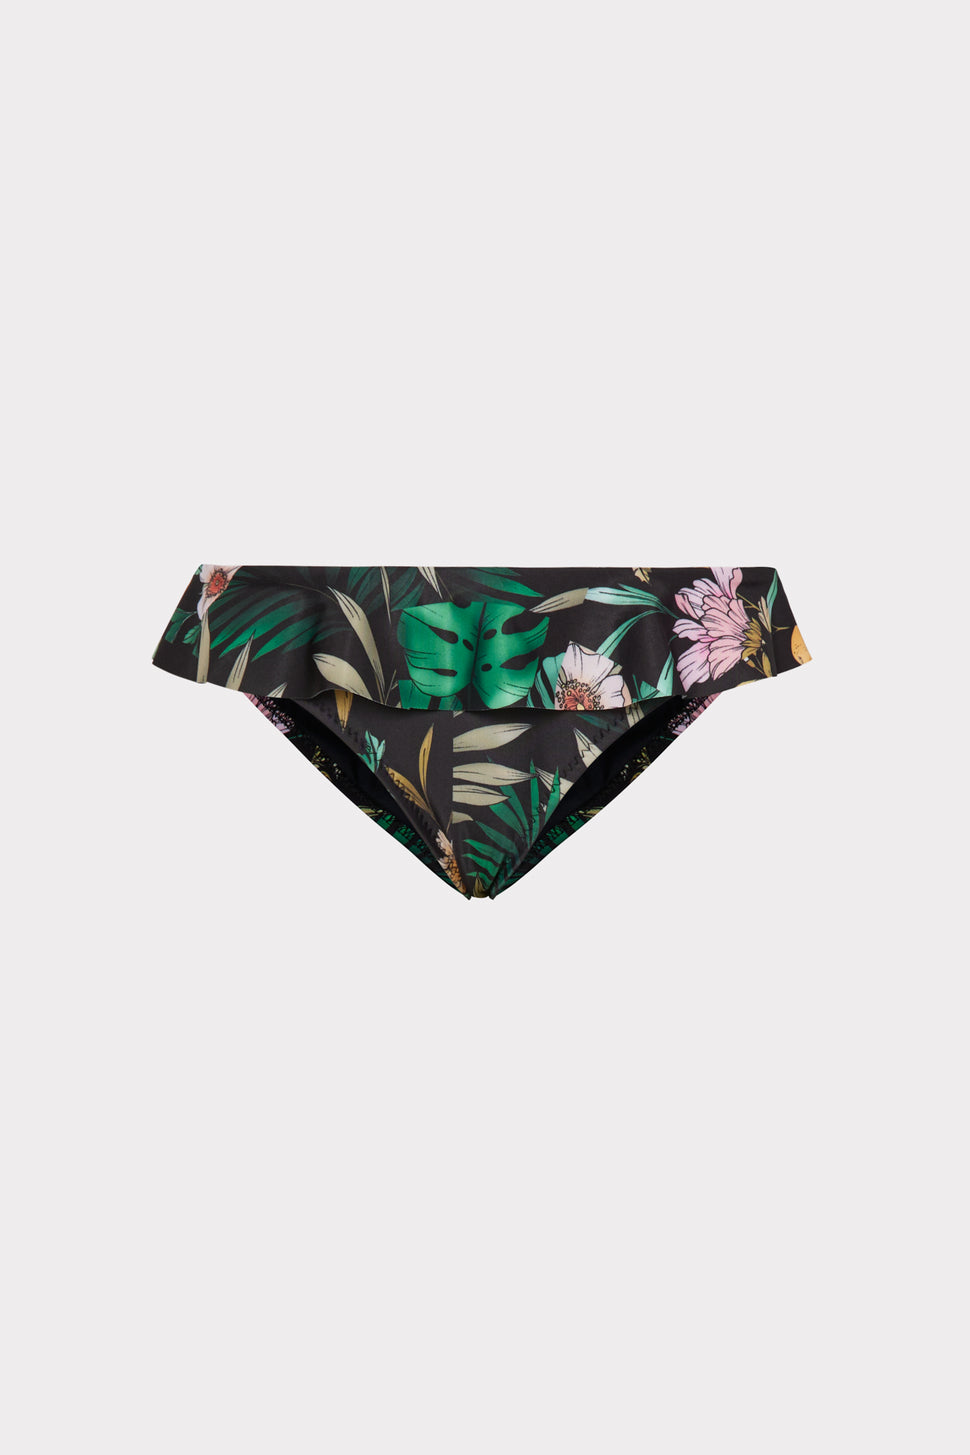 Women's Ruffle Jungle Floral Print Bikini Bottom